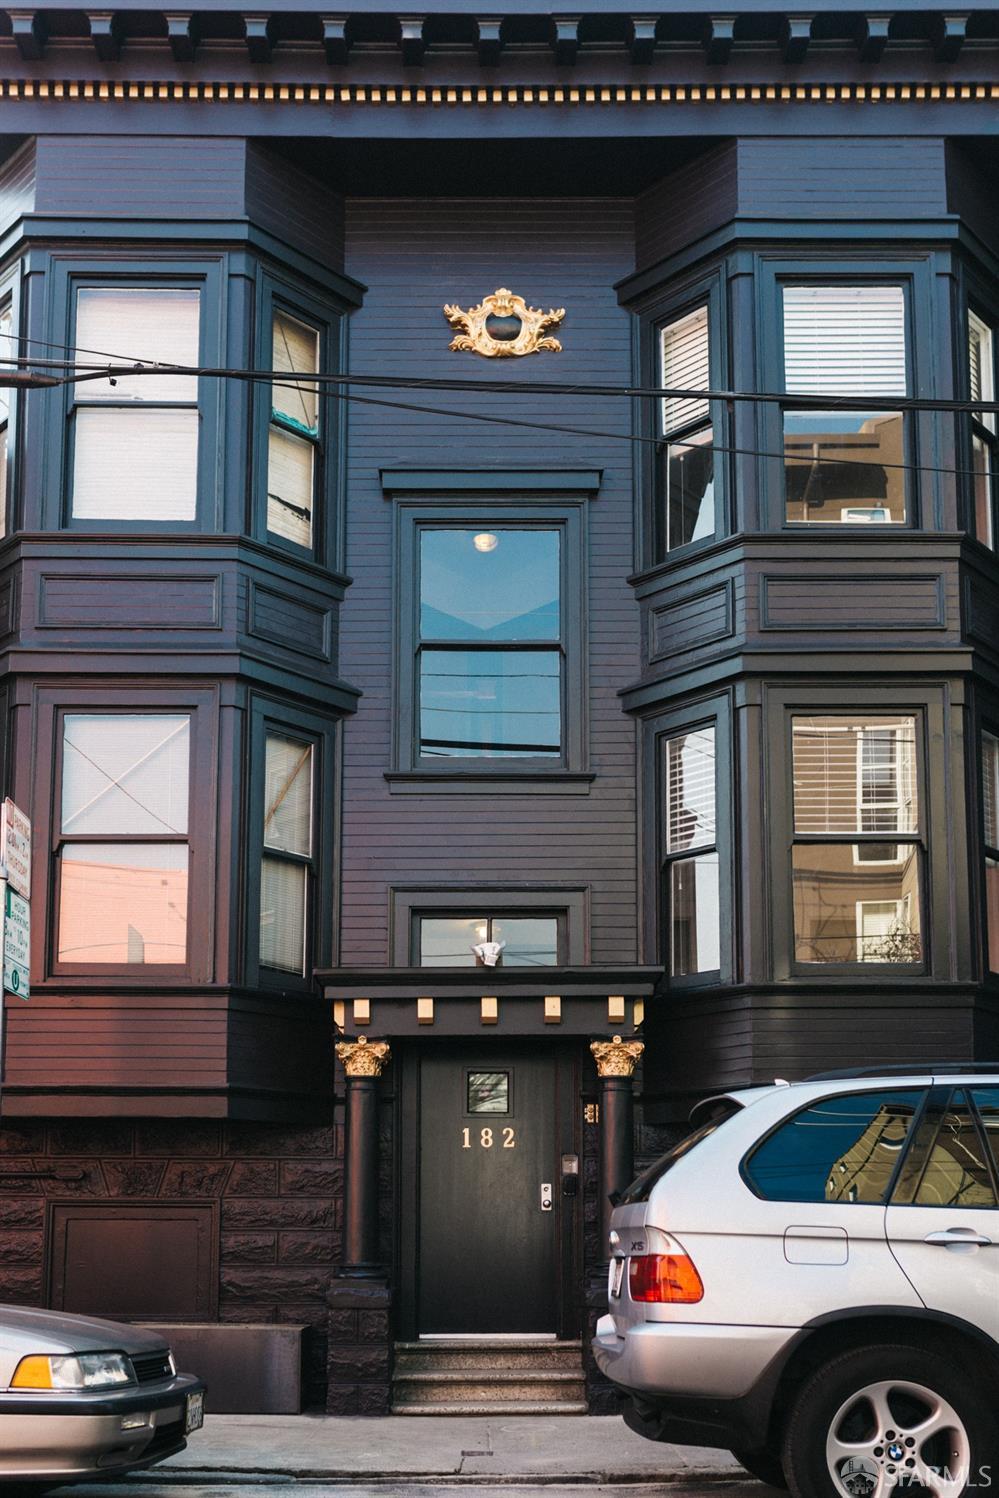 Photo of 182 Langton St in San Francisco, CA